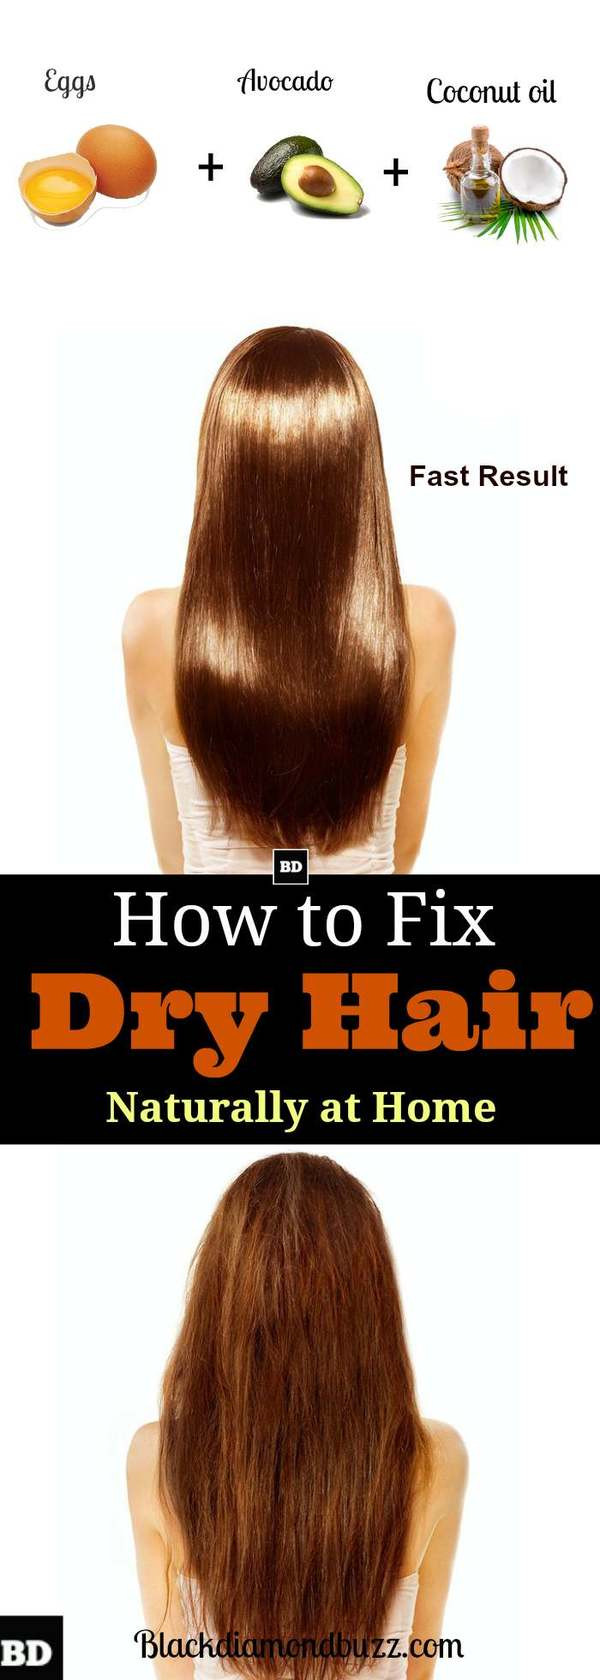 DIY Dry Hair Treatment
 DIY Home Reme s for Dry Hair Overnight Dry Hair Treatments